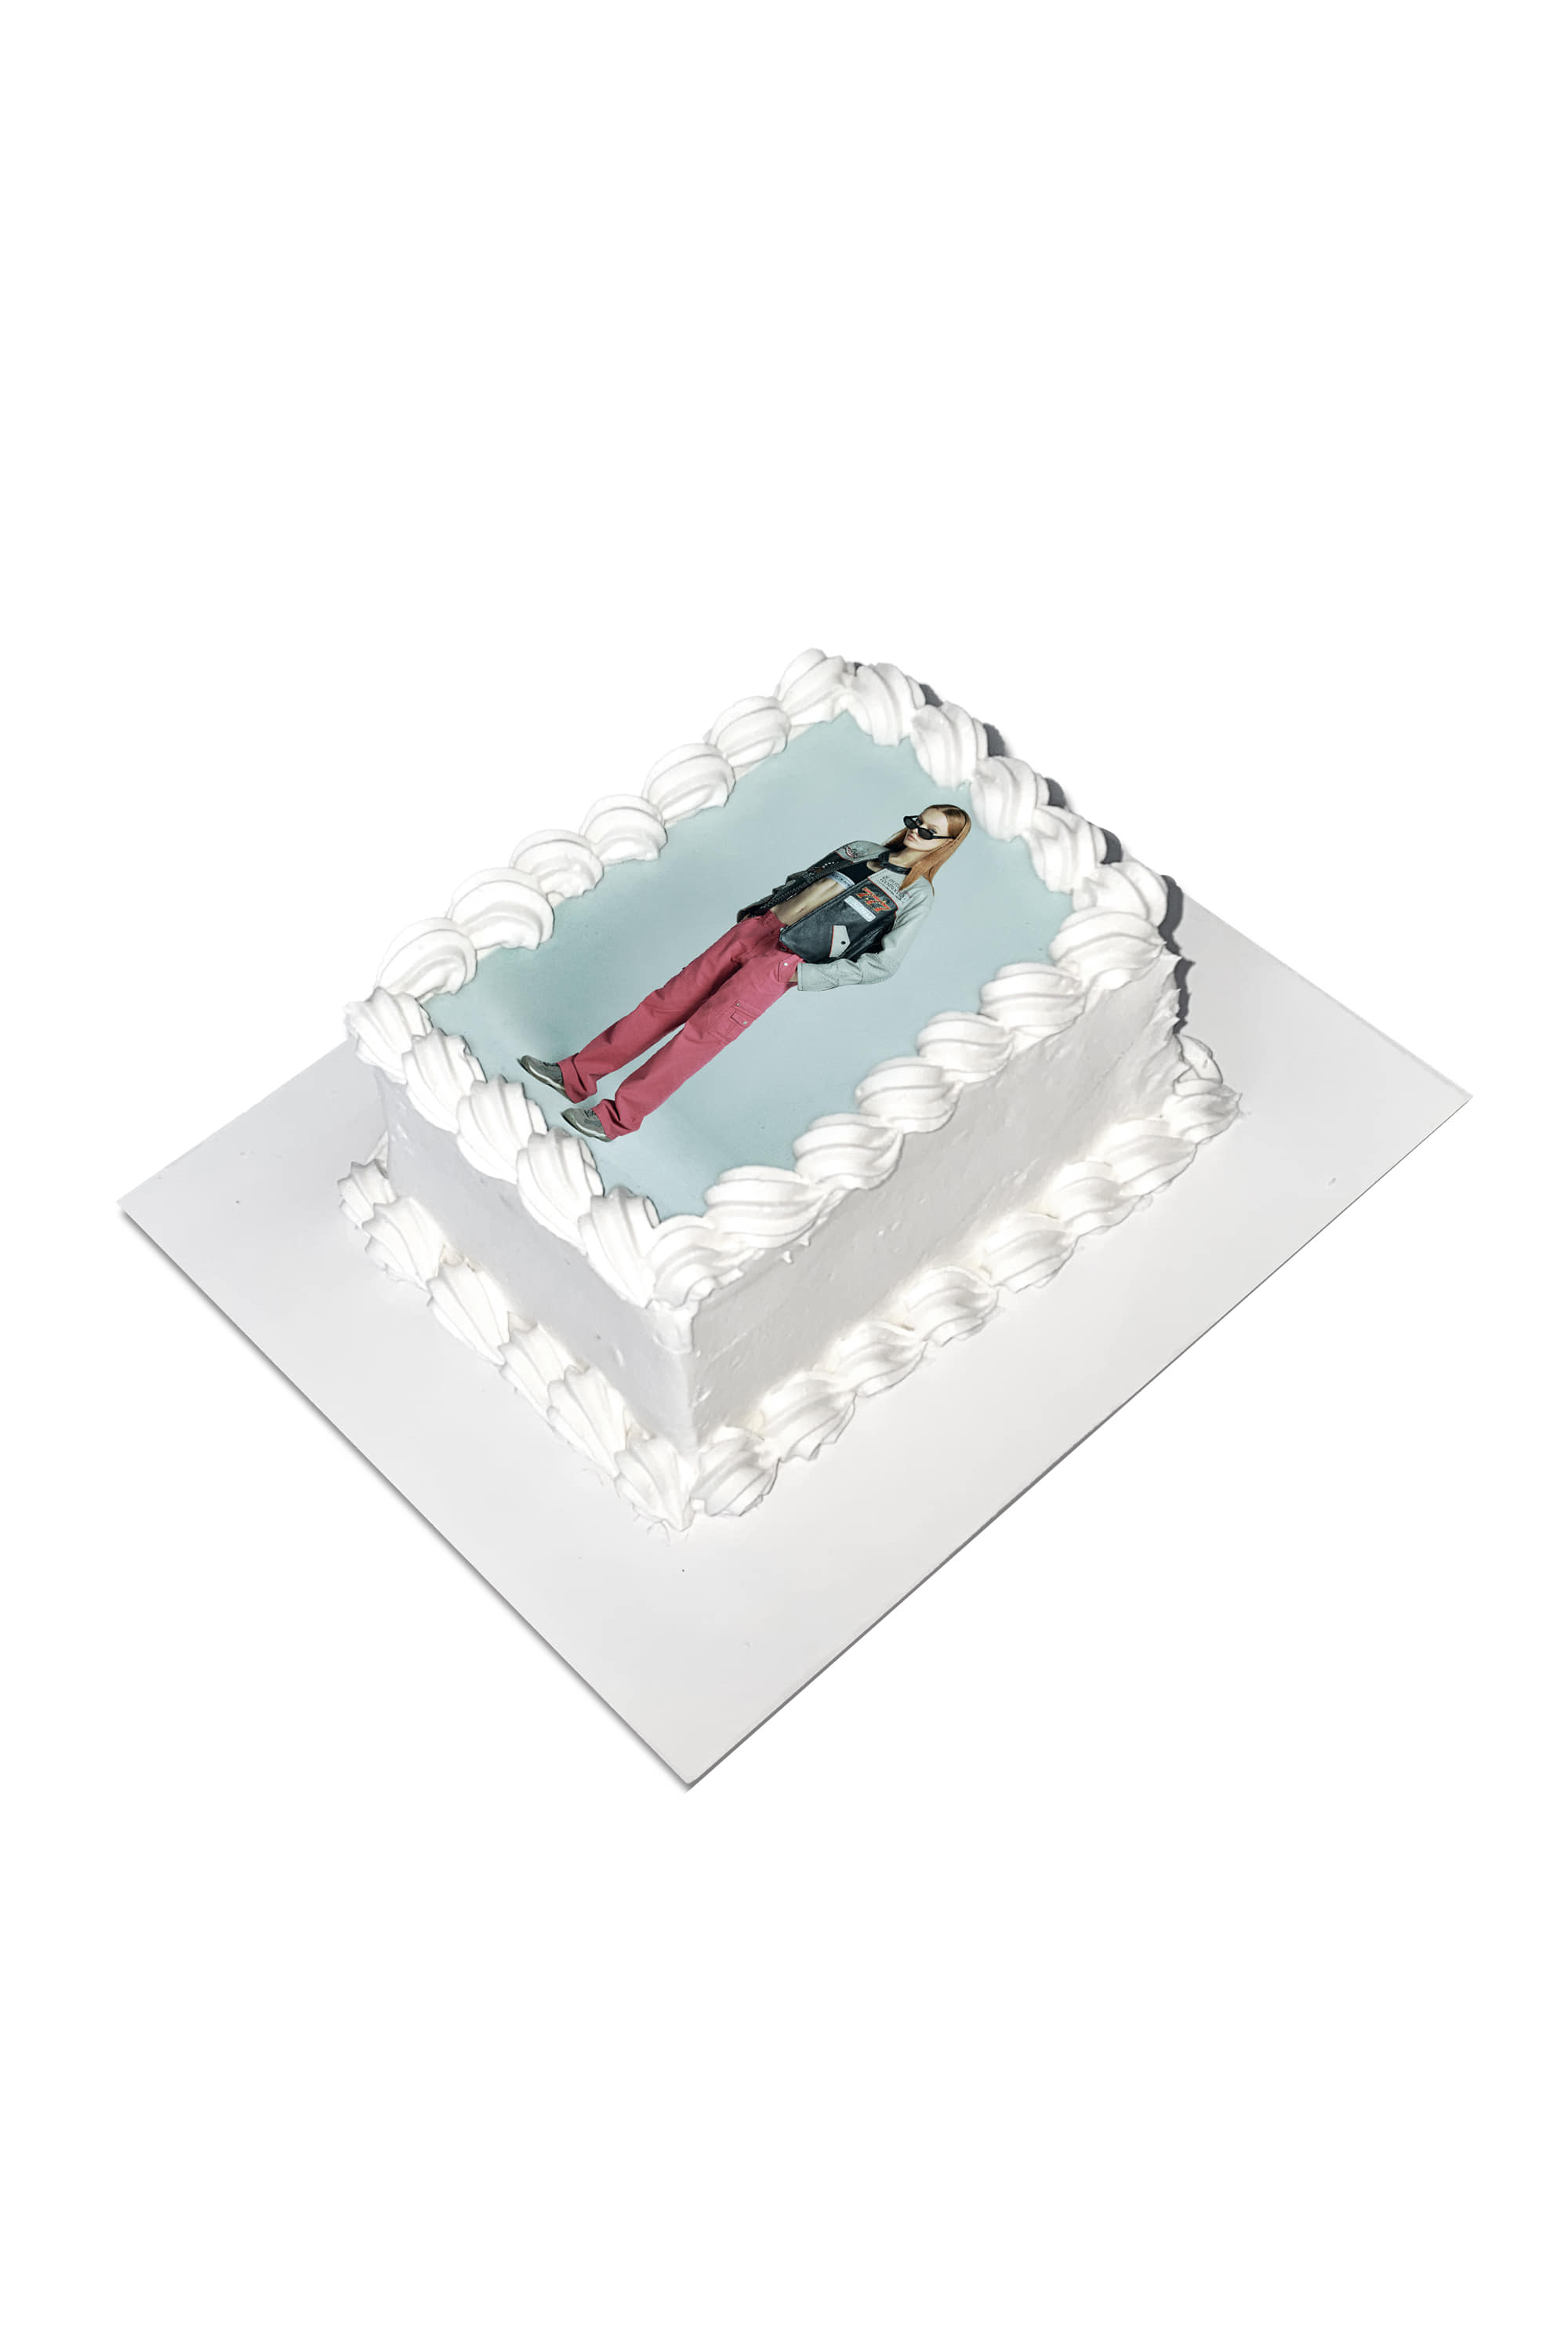 Sculptor®s Birthday Cake